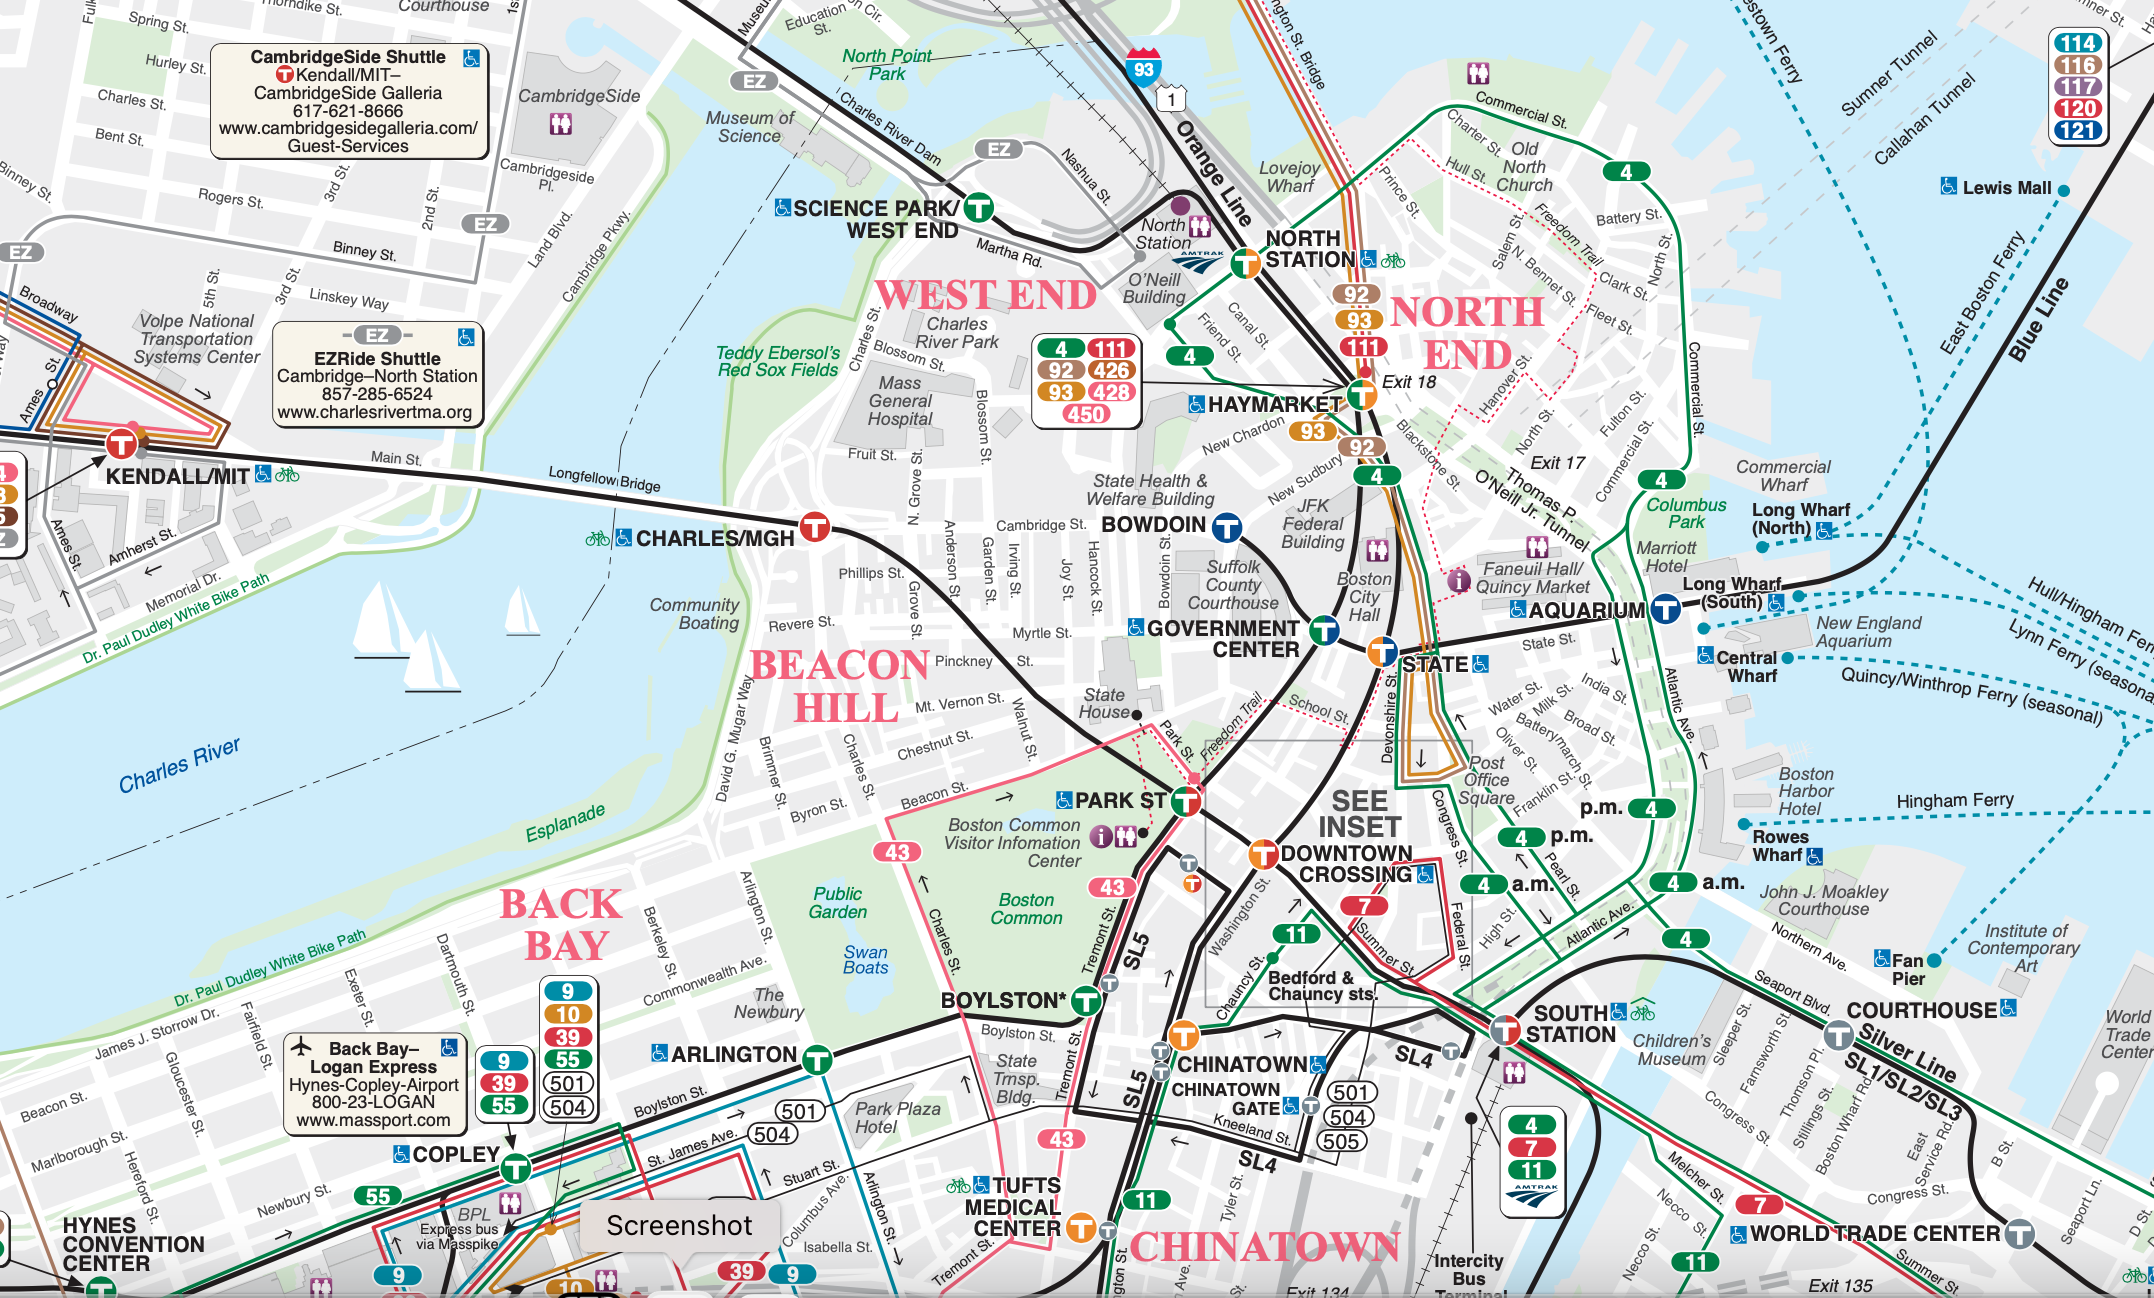 MBTA public transit map.